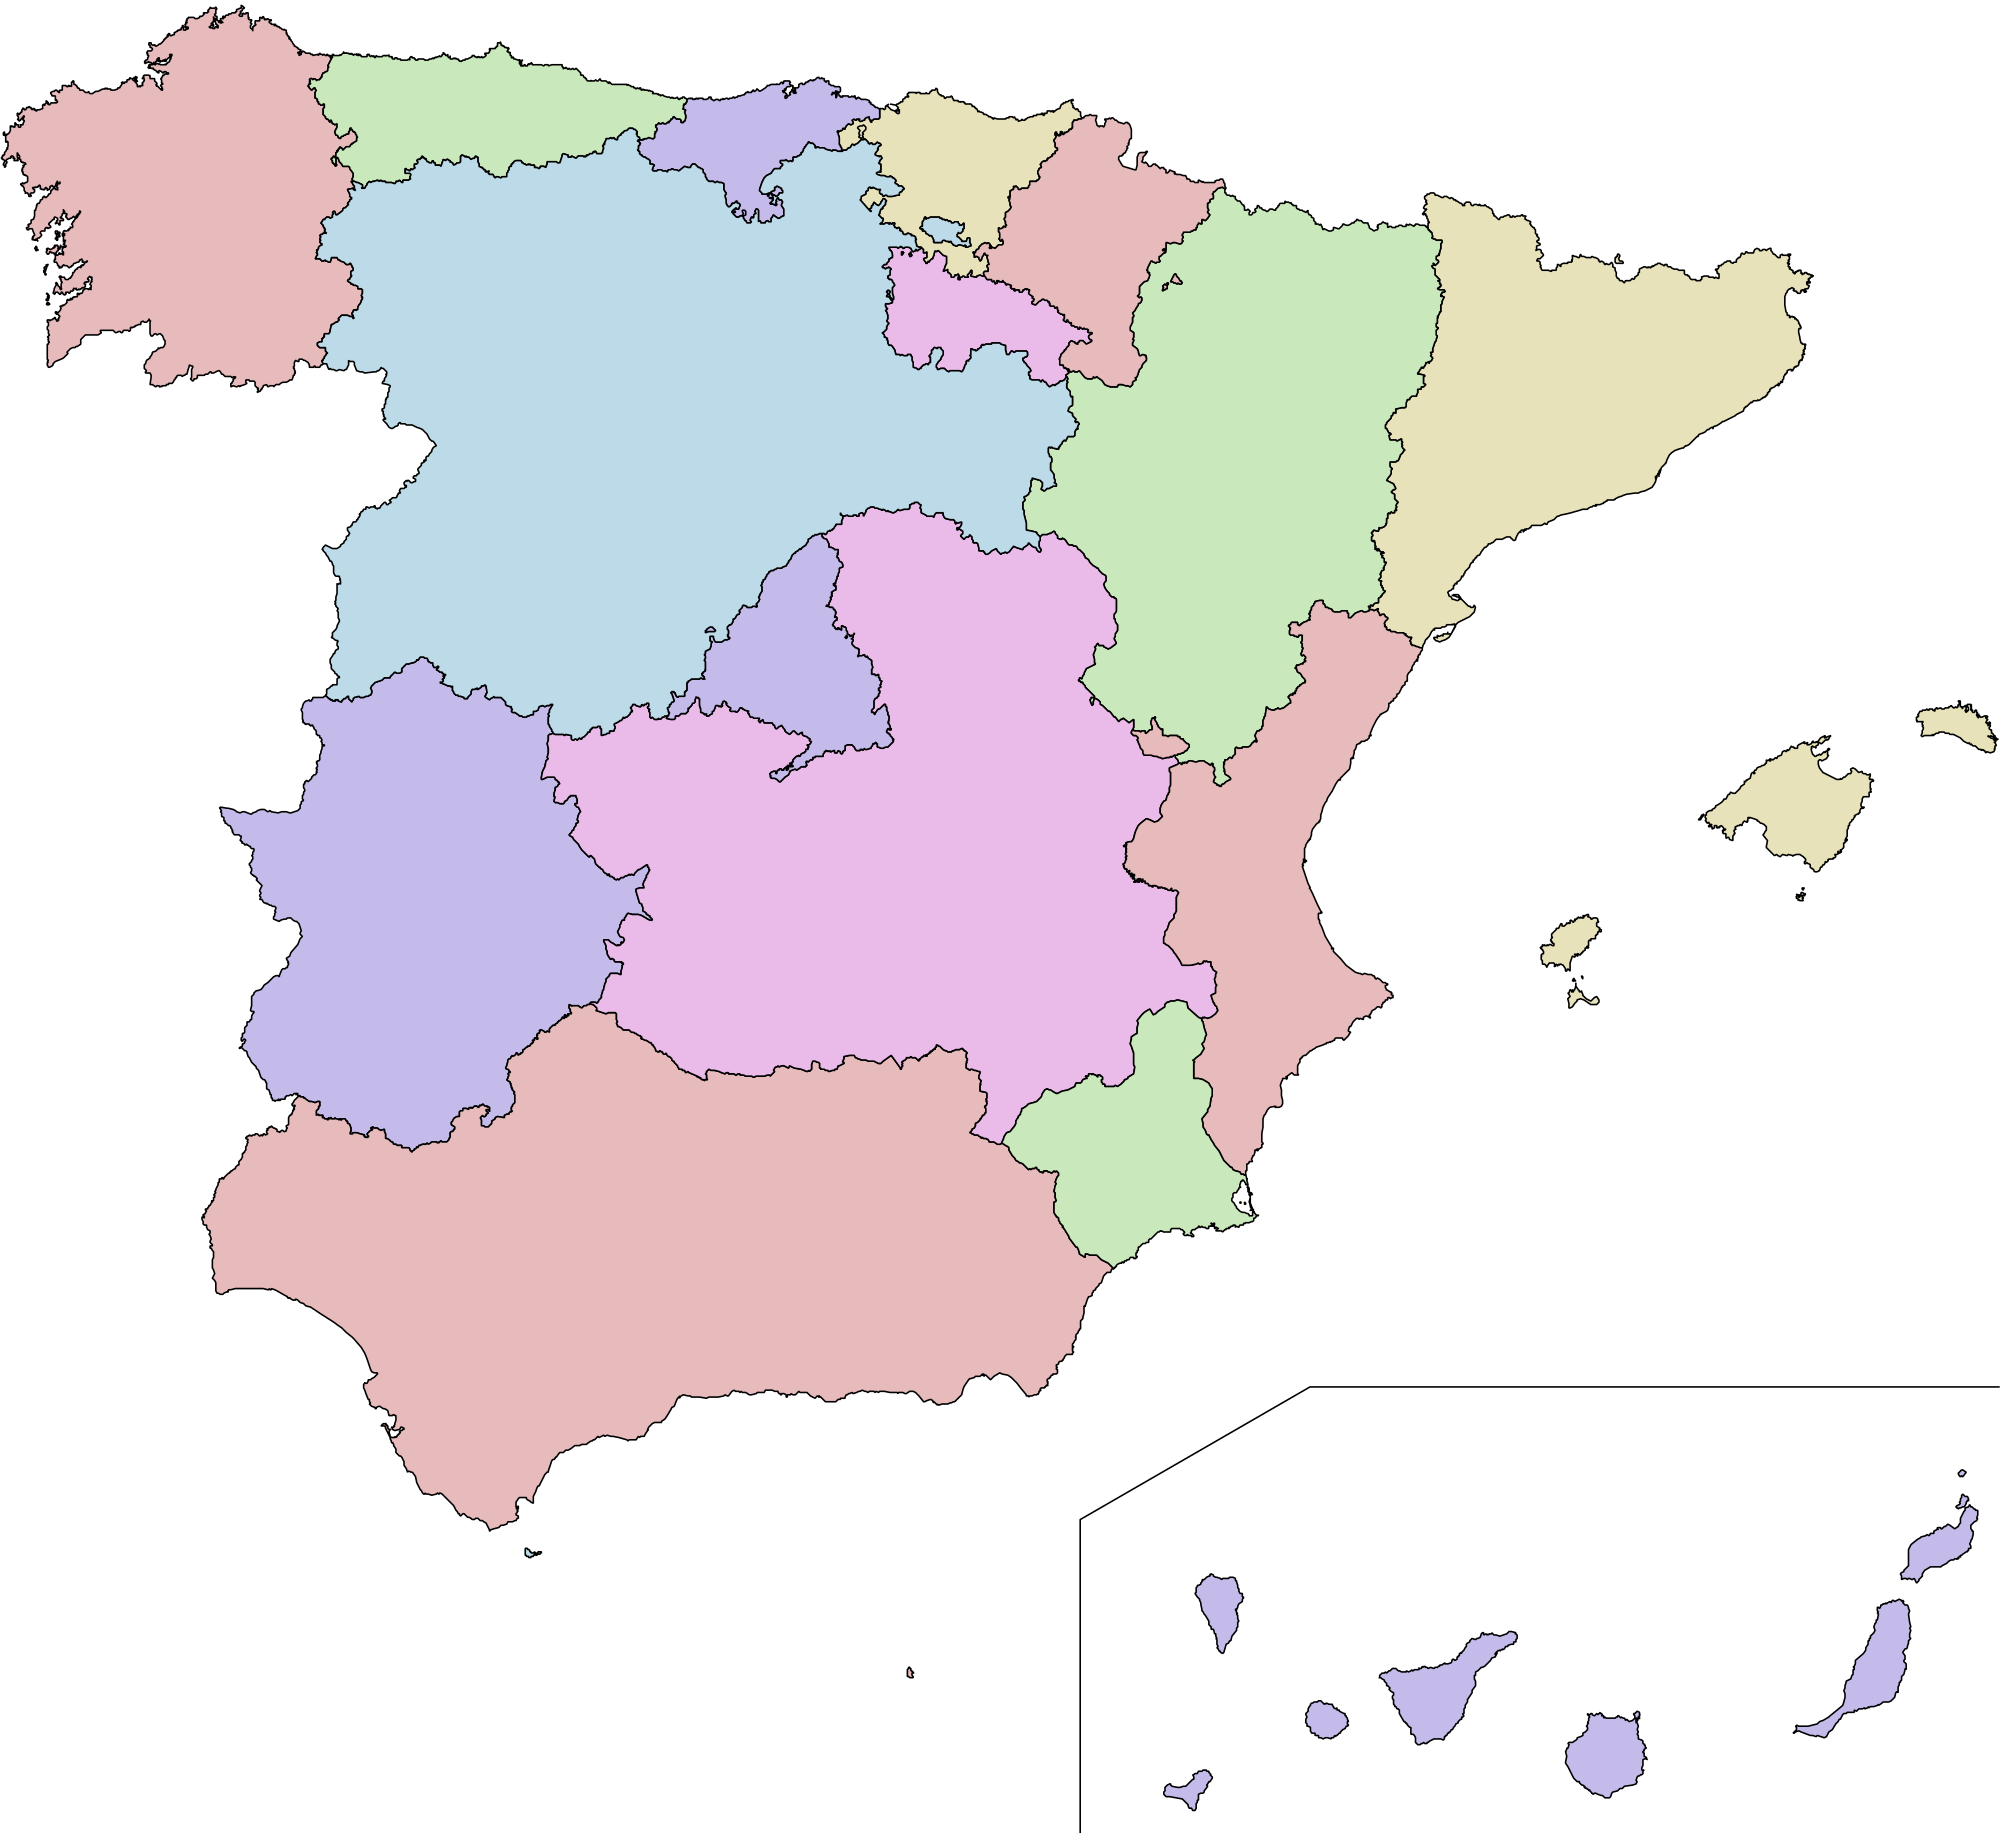 Spain photo